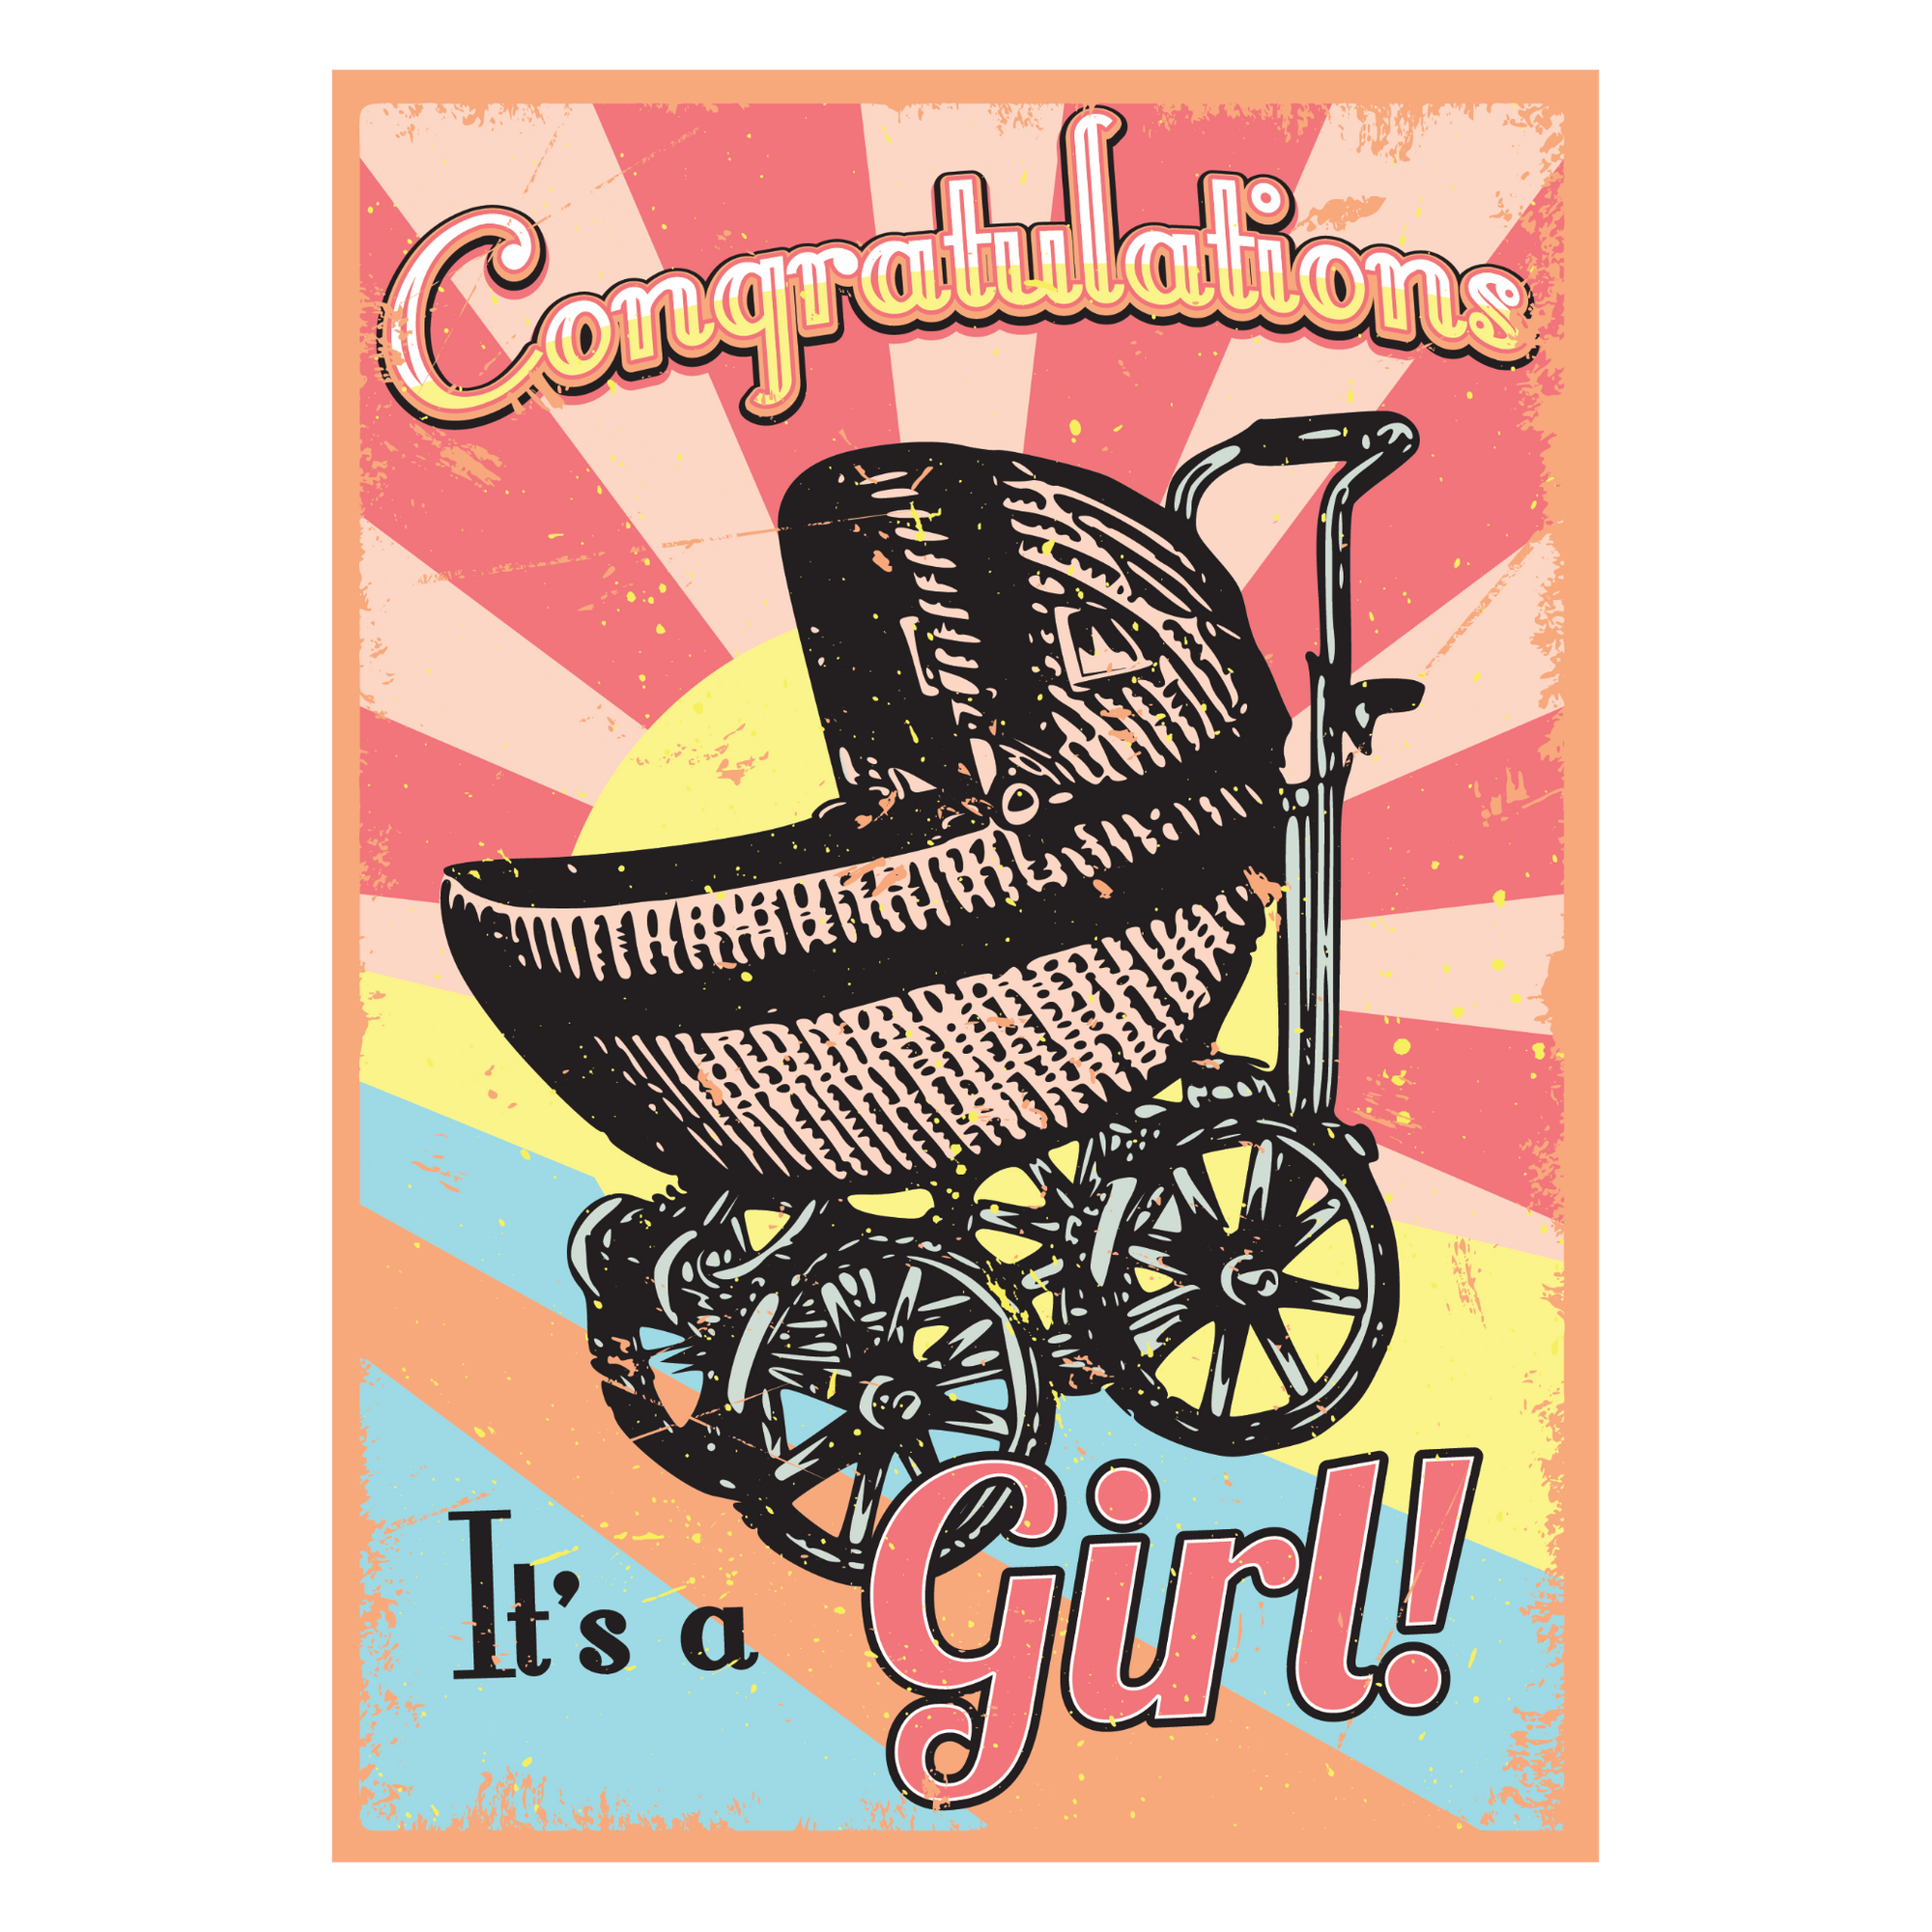 It's a Girl! Card